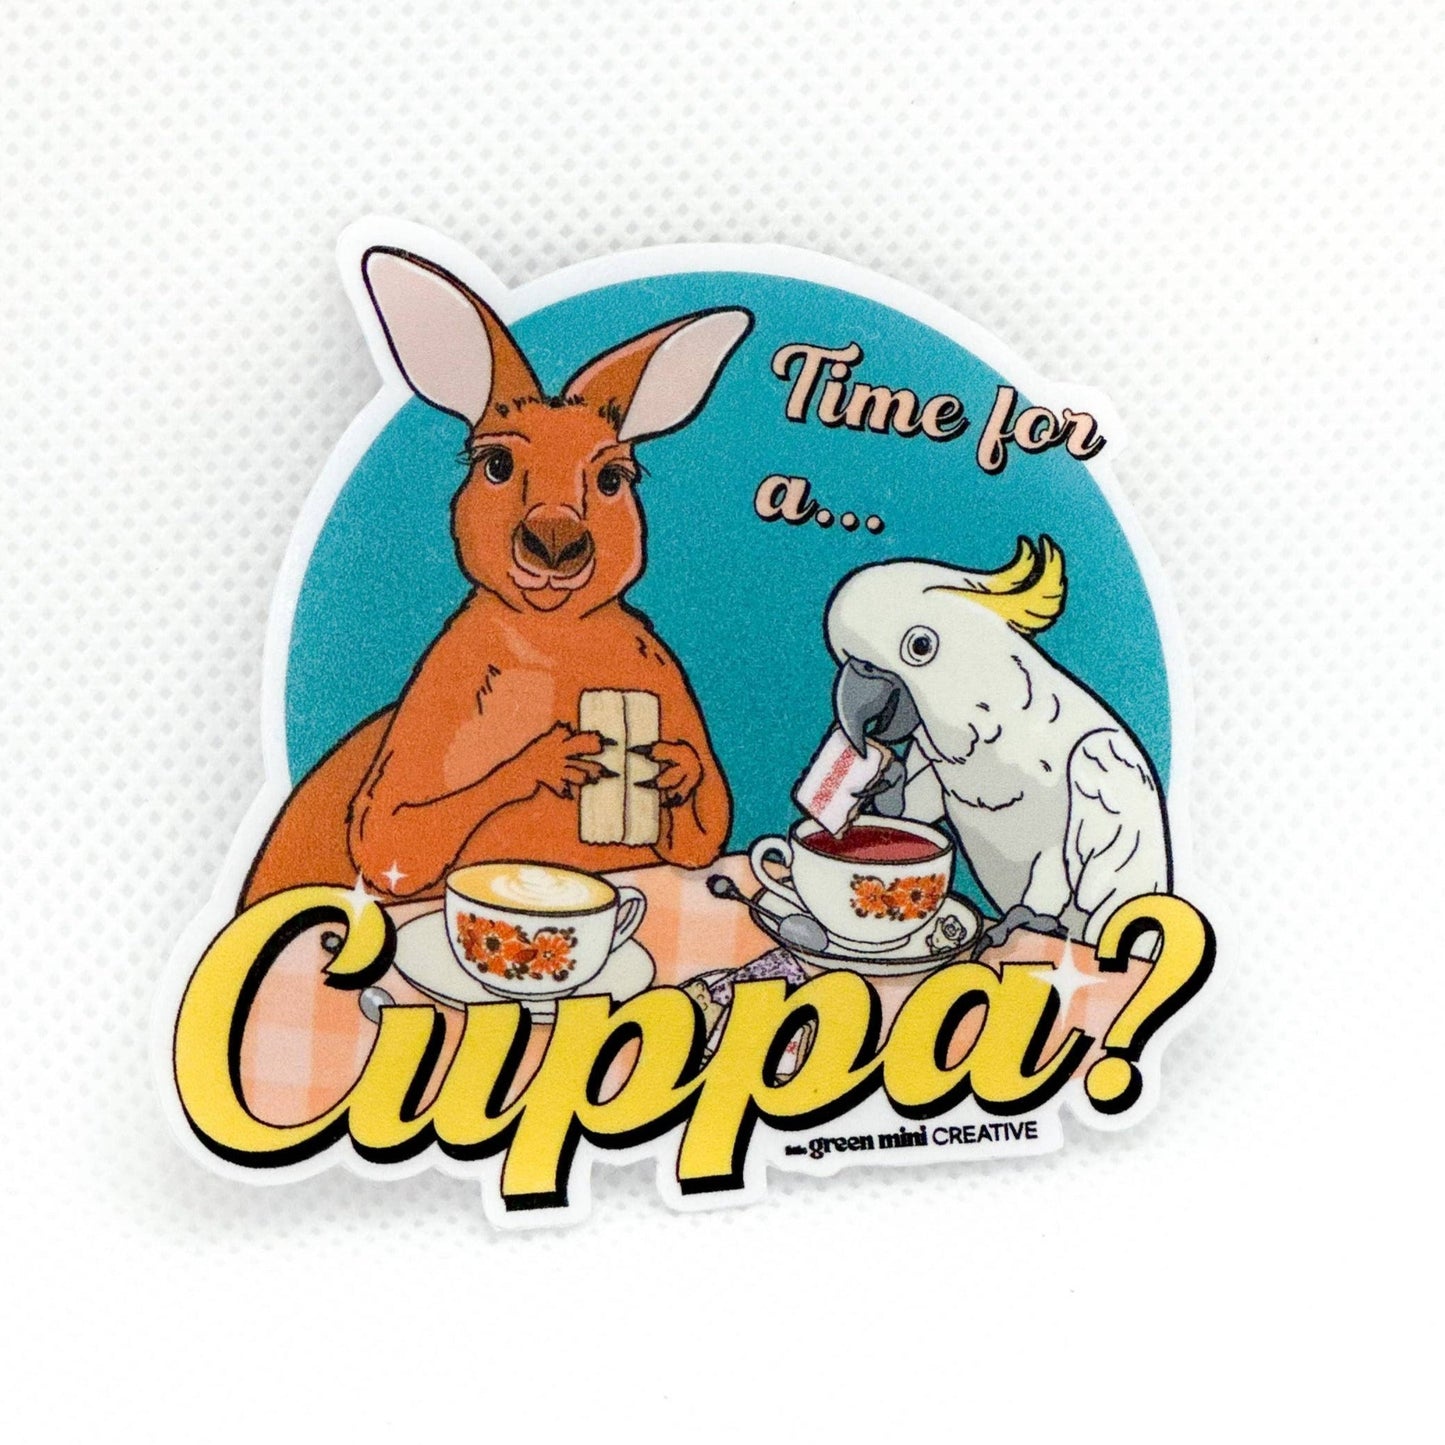 GREEN MINI CREATIVE- "Time for a Cuppa" Sticker